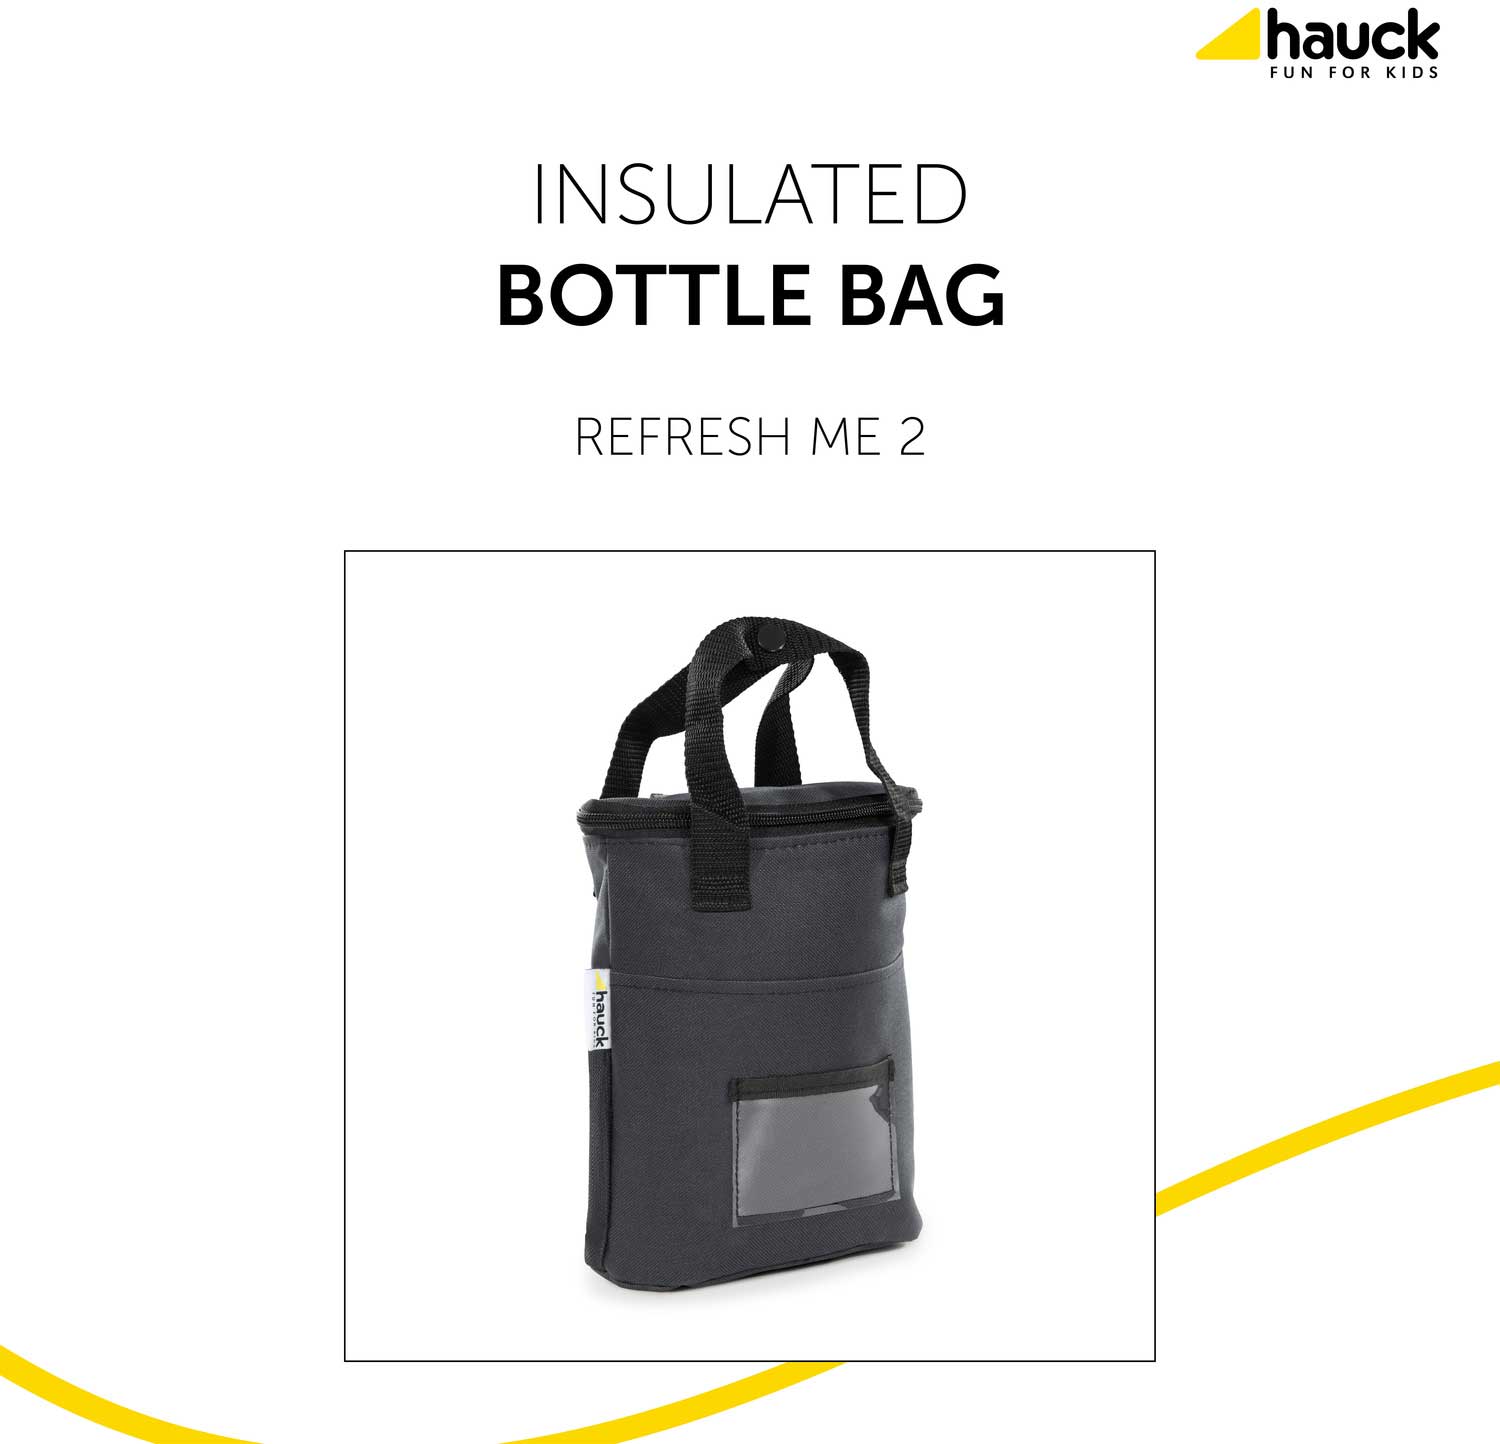 Insulated bottle bag